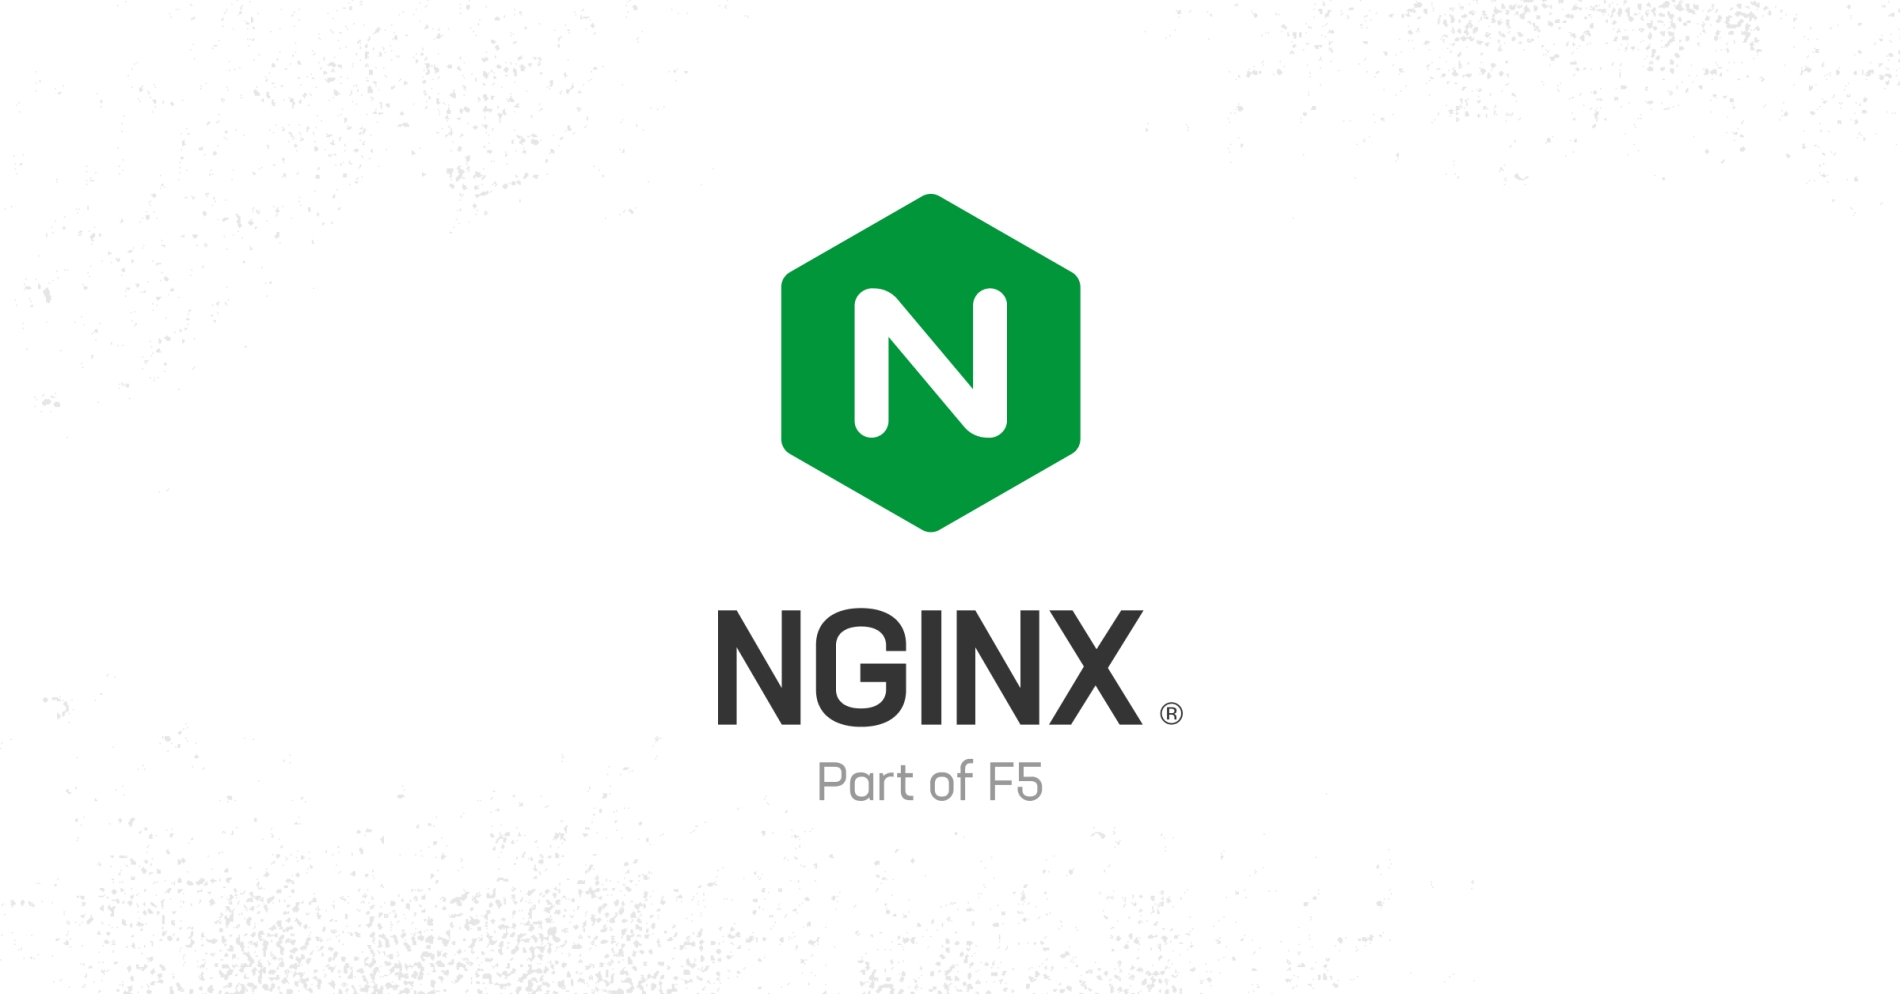 NGINX on Equinix Metal